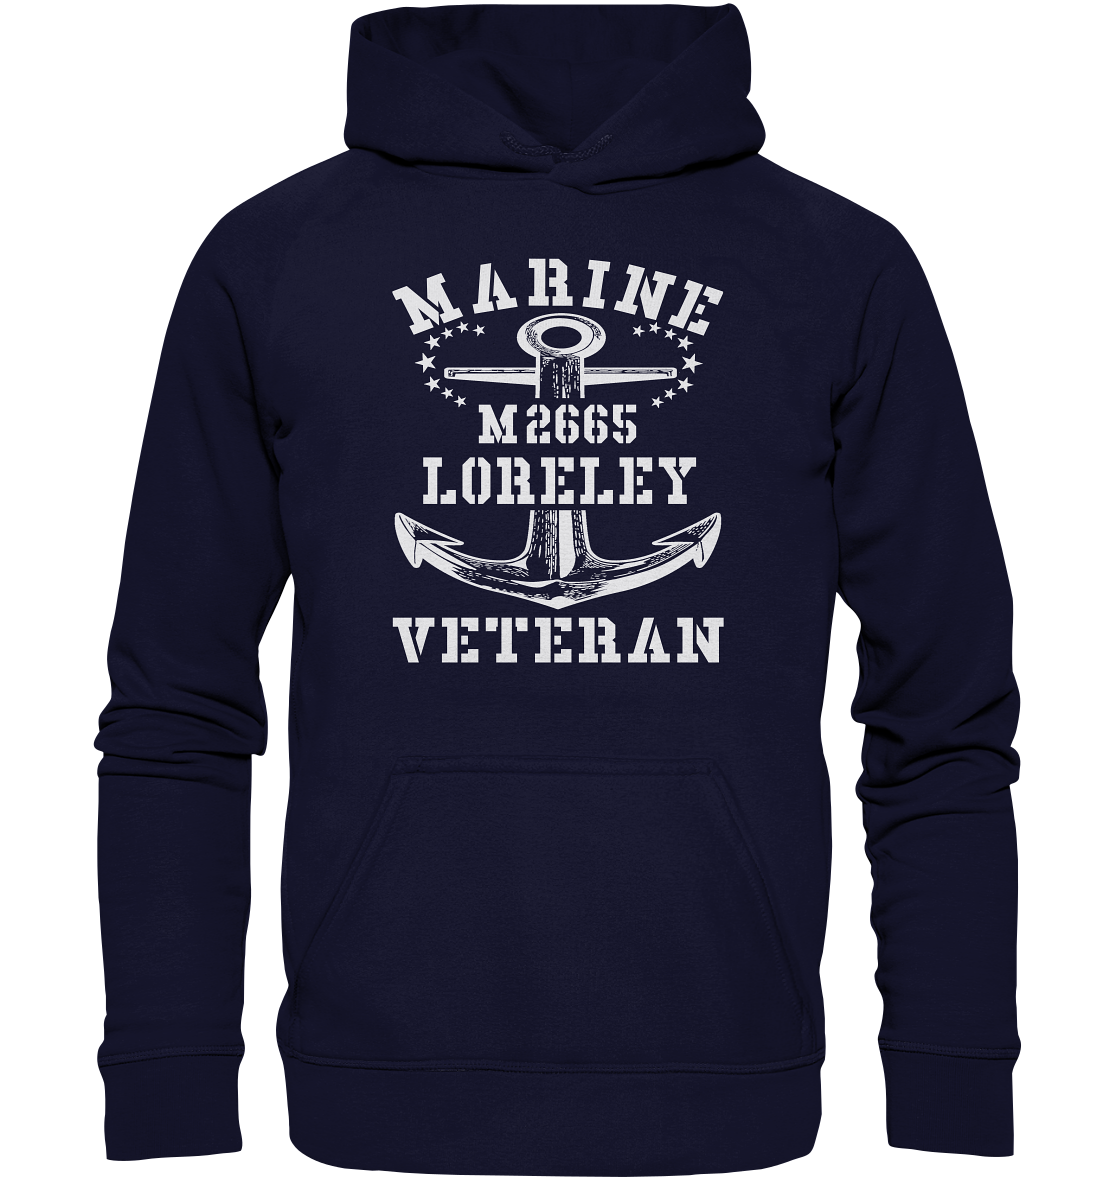 BiMi M2665 LORELEY Marine Veteran - Basic Unisex Hoodie XL